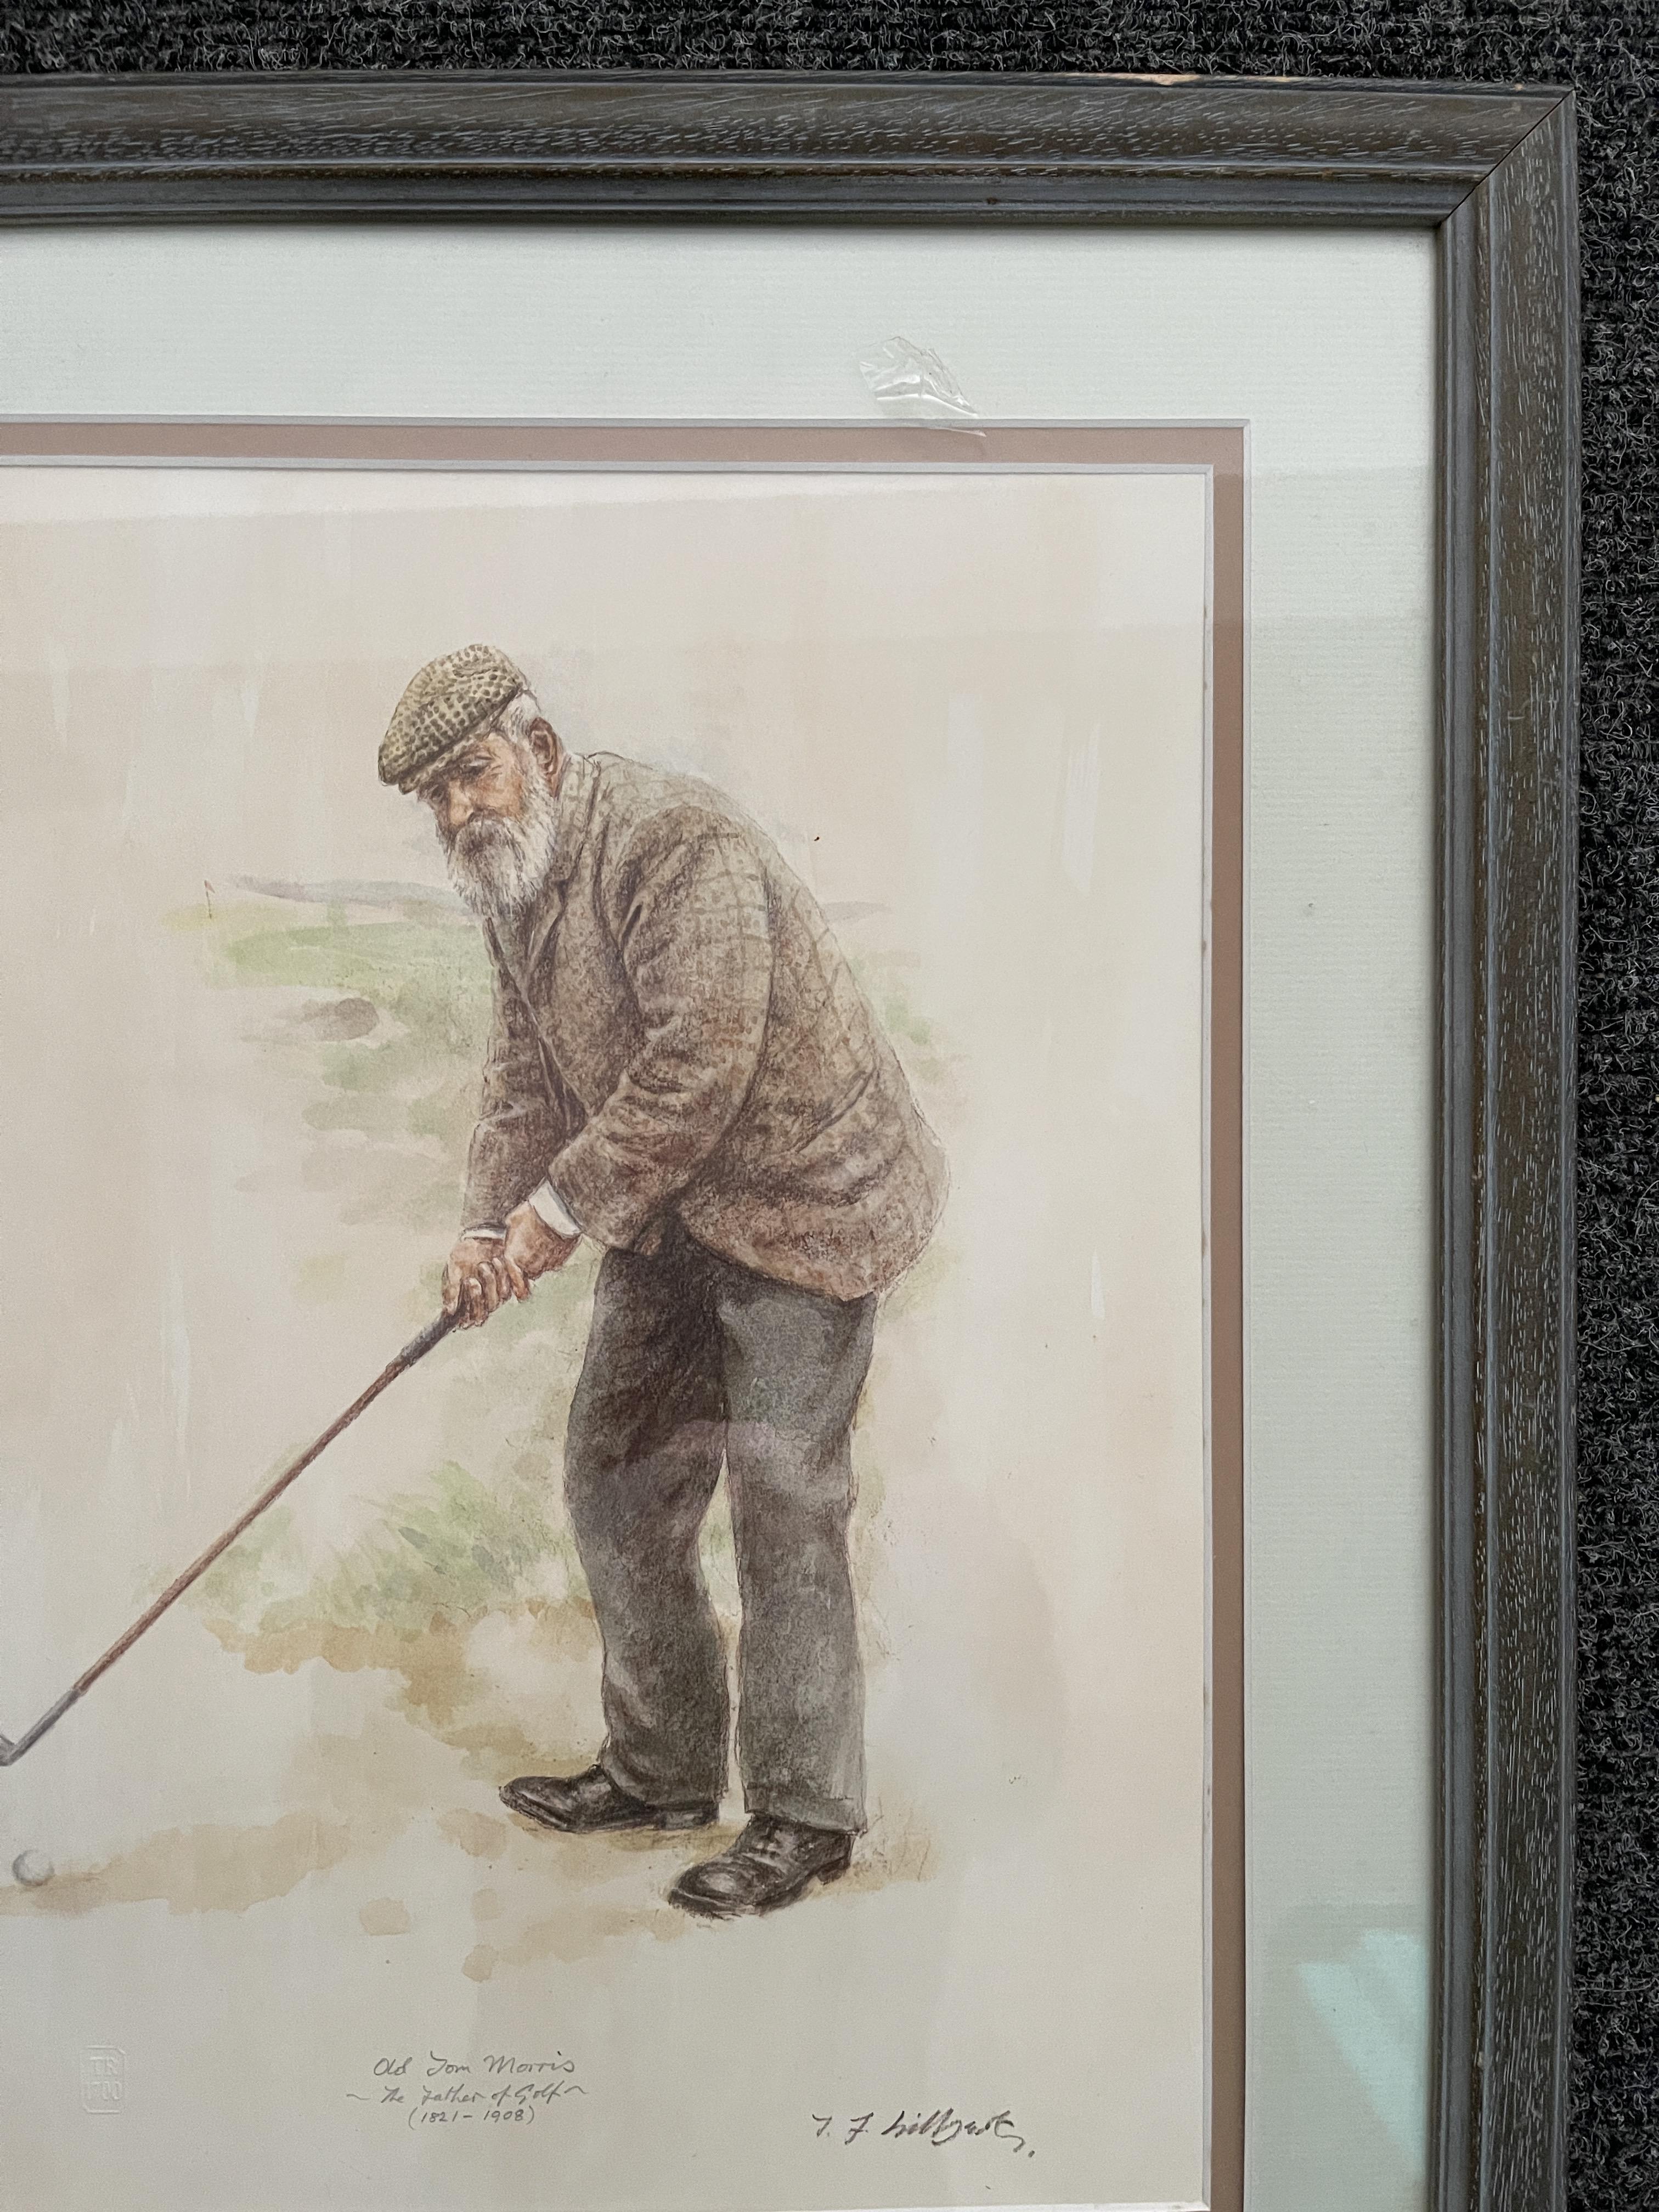 Signed Golf print ""Old John Morris"" - Image 3 of 12